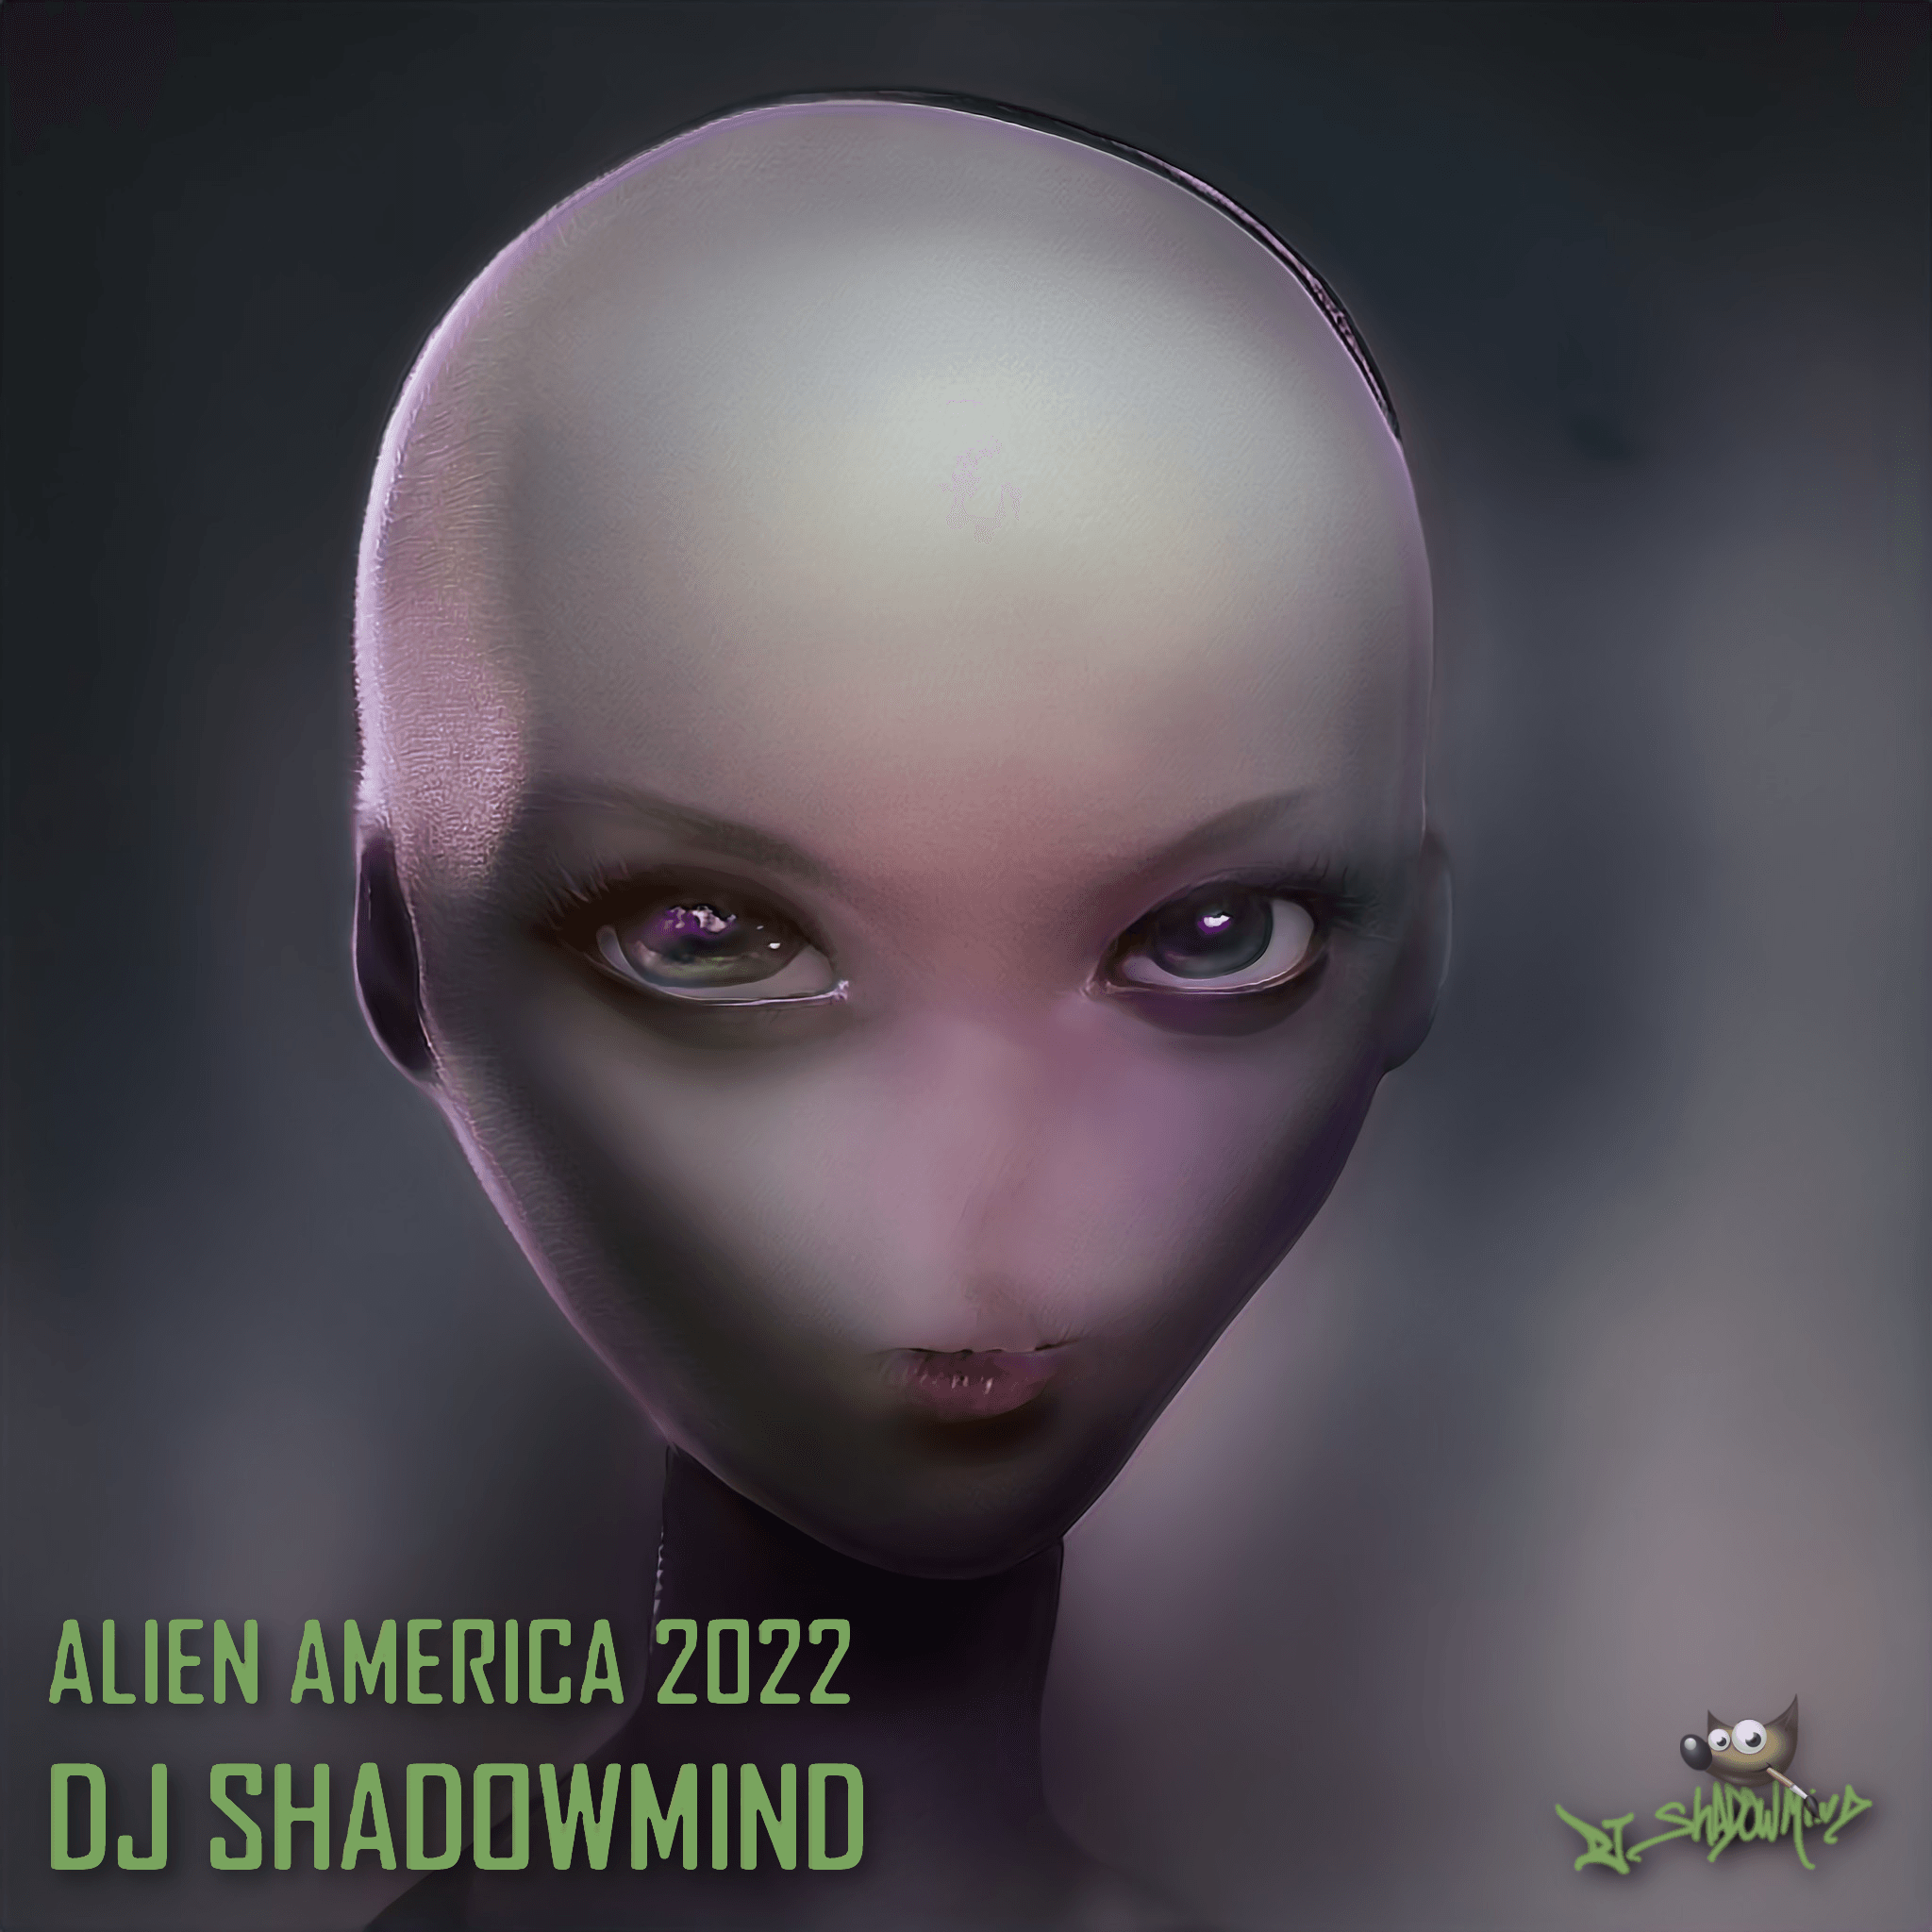 Alien America 2022 - Agent 058